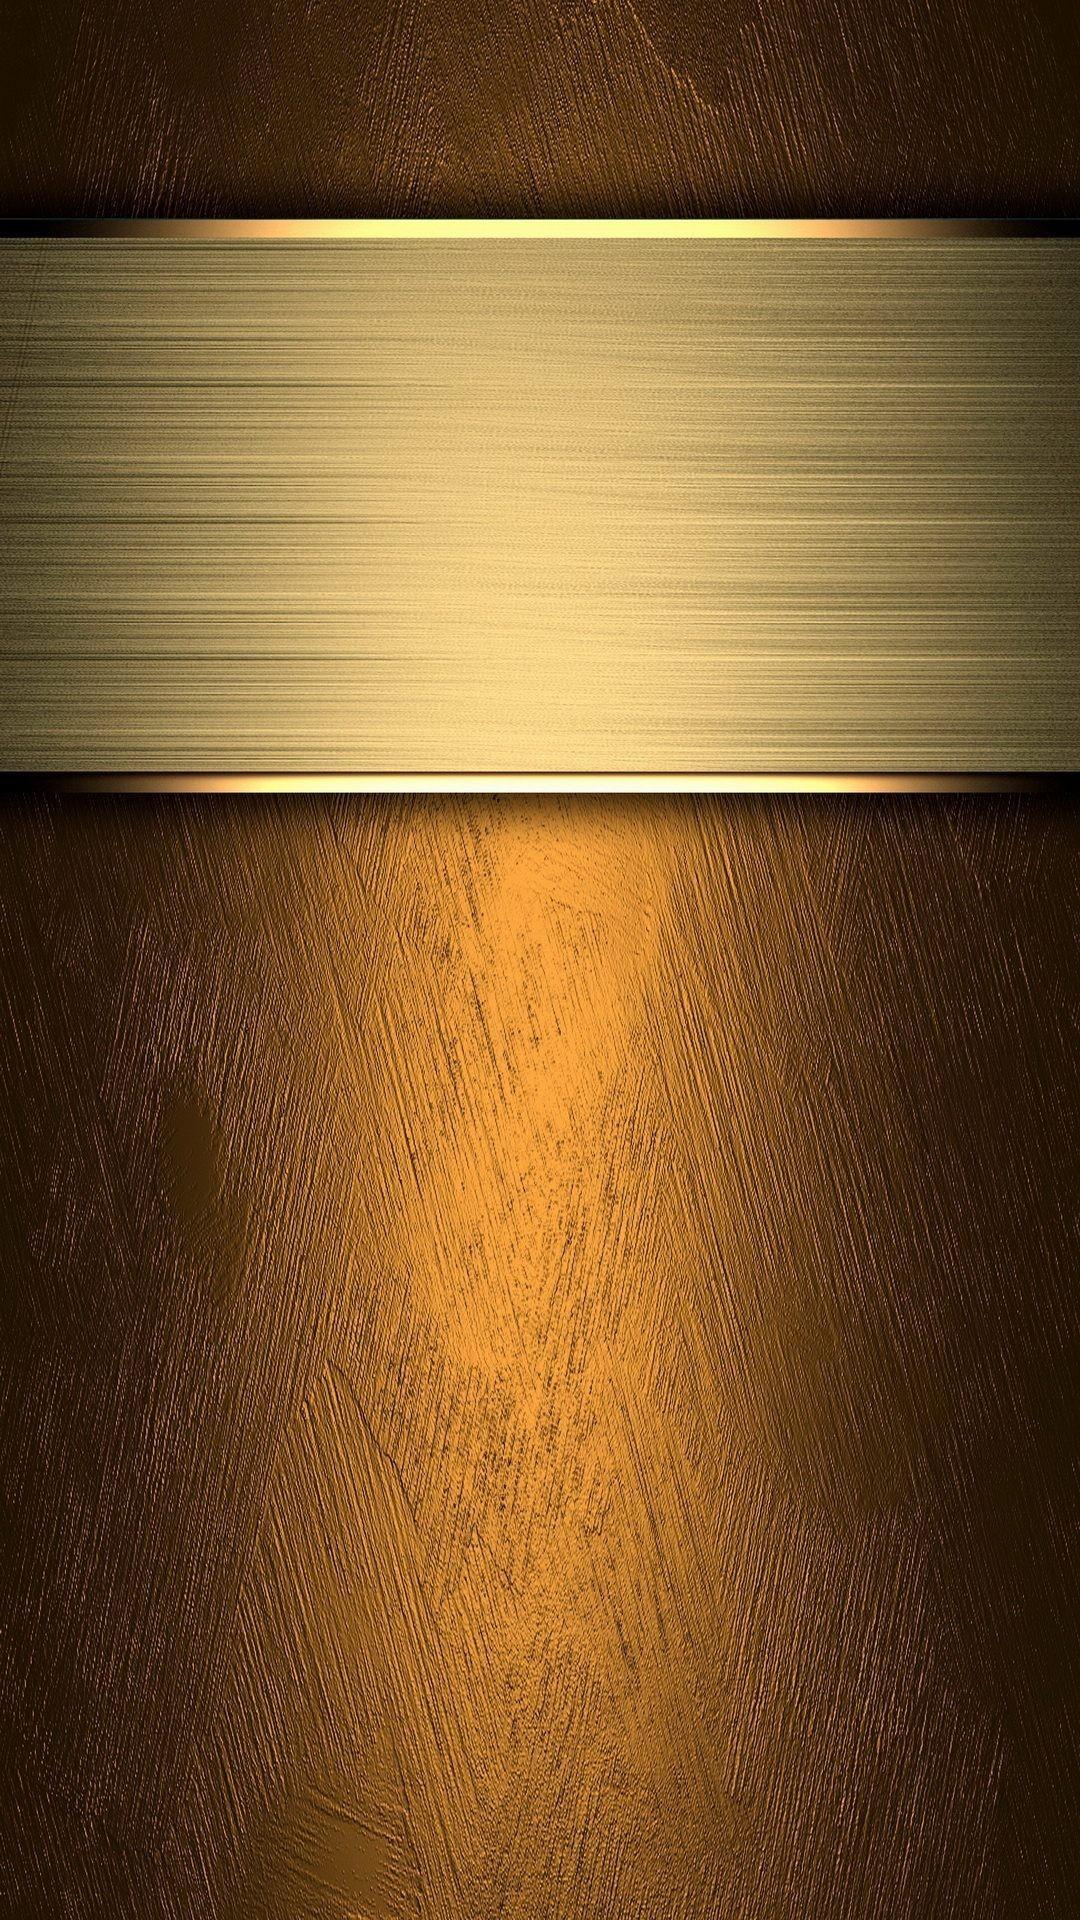 IPhone 6 Plus Gold Wallpaper